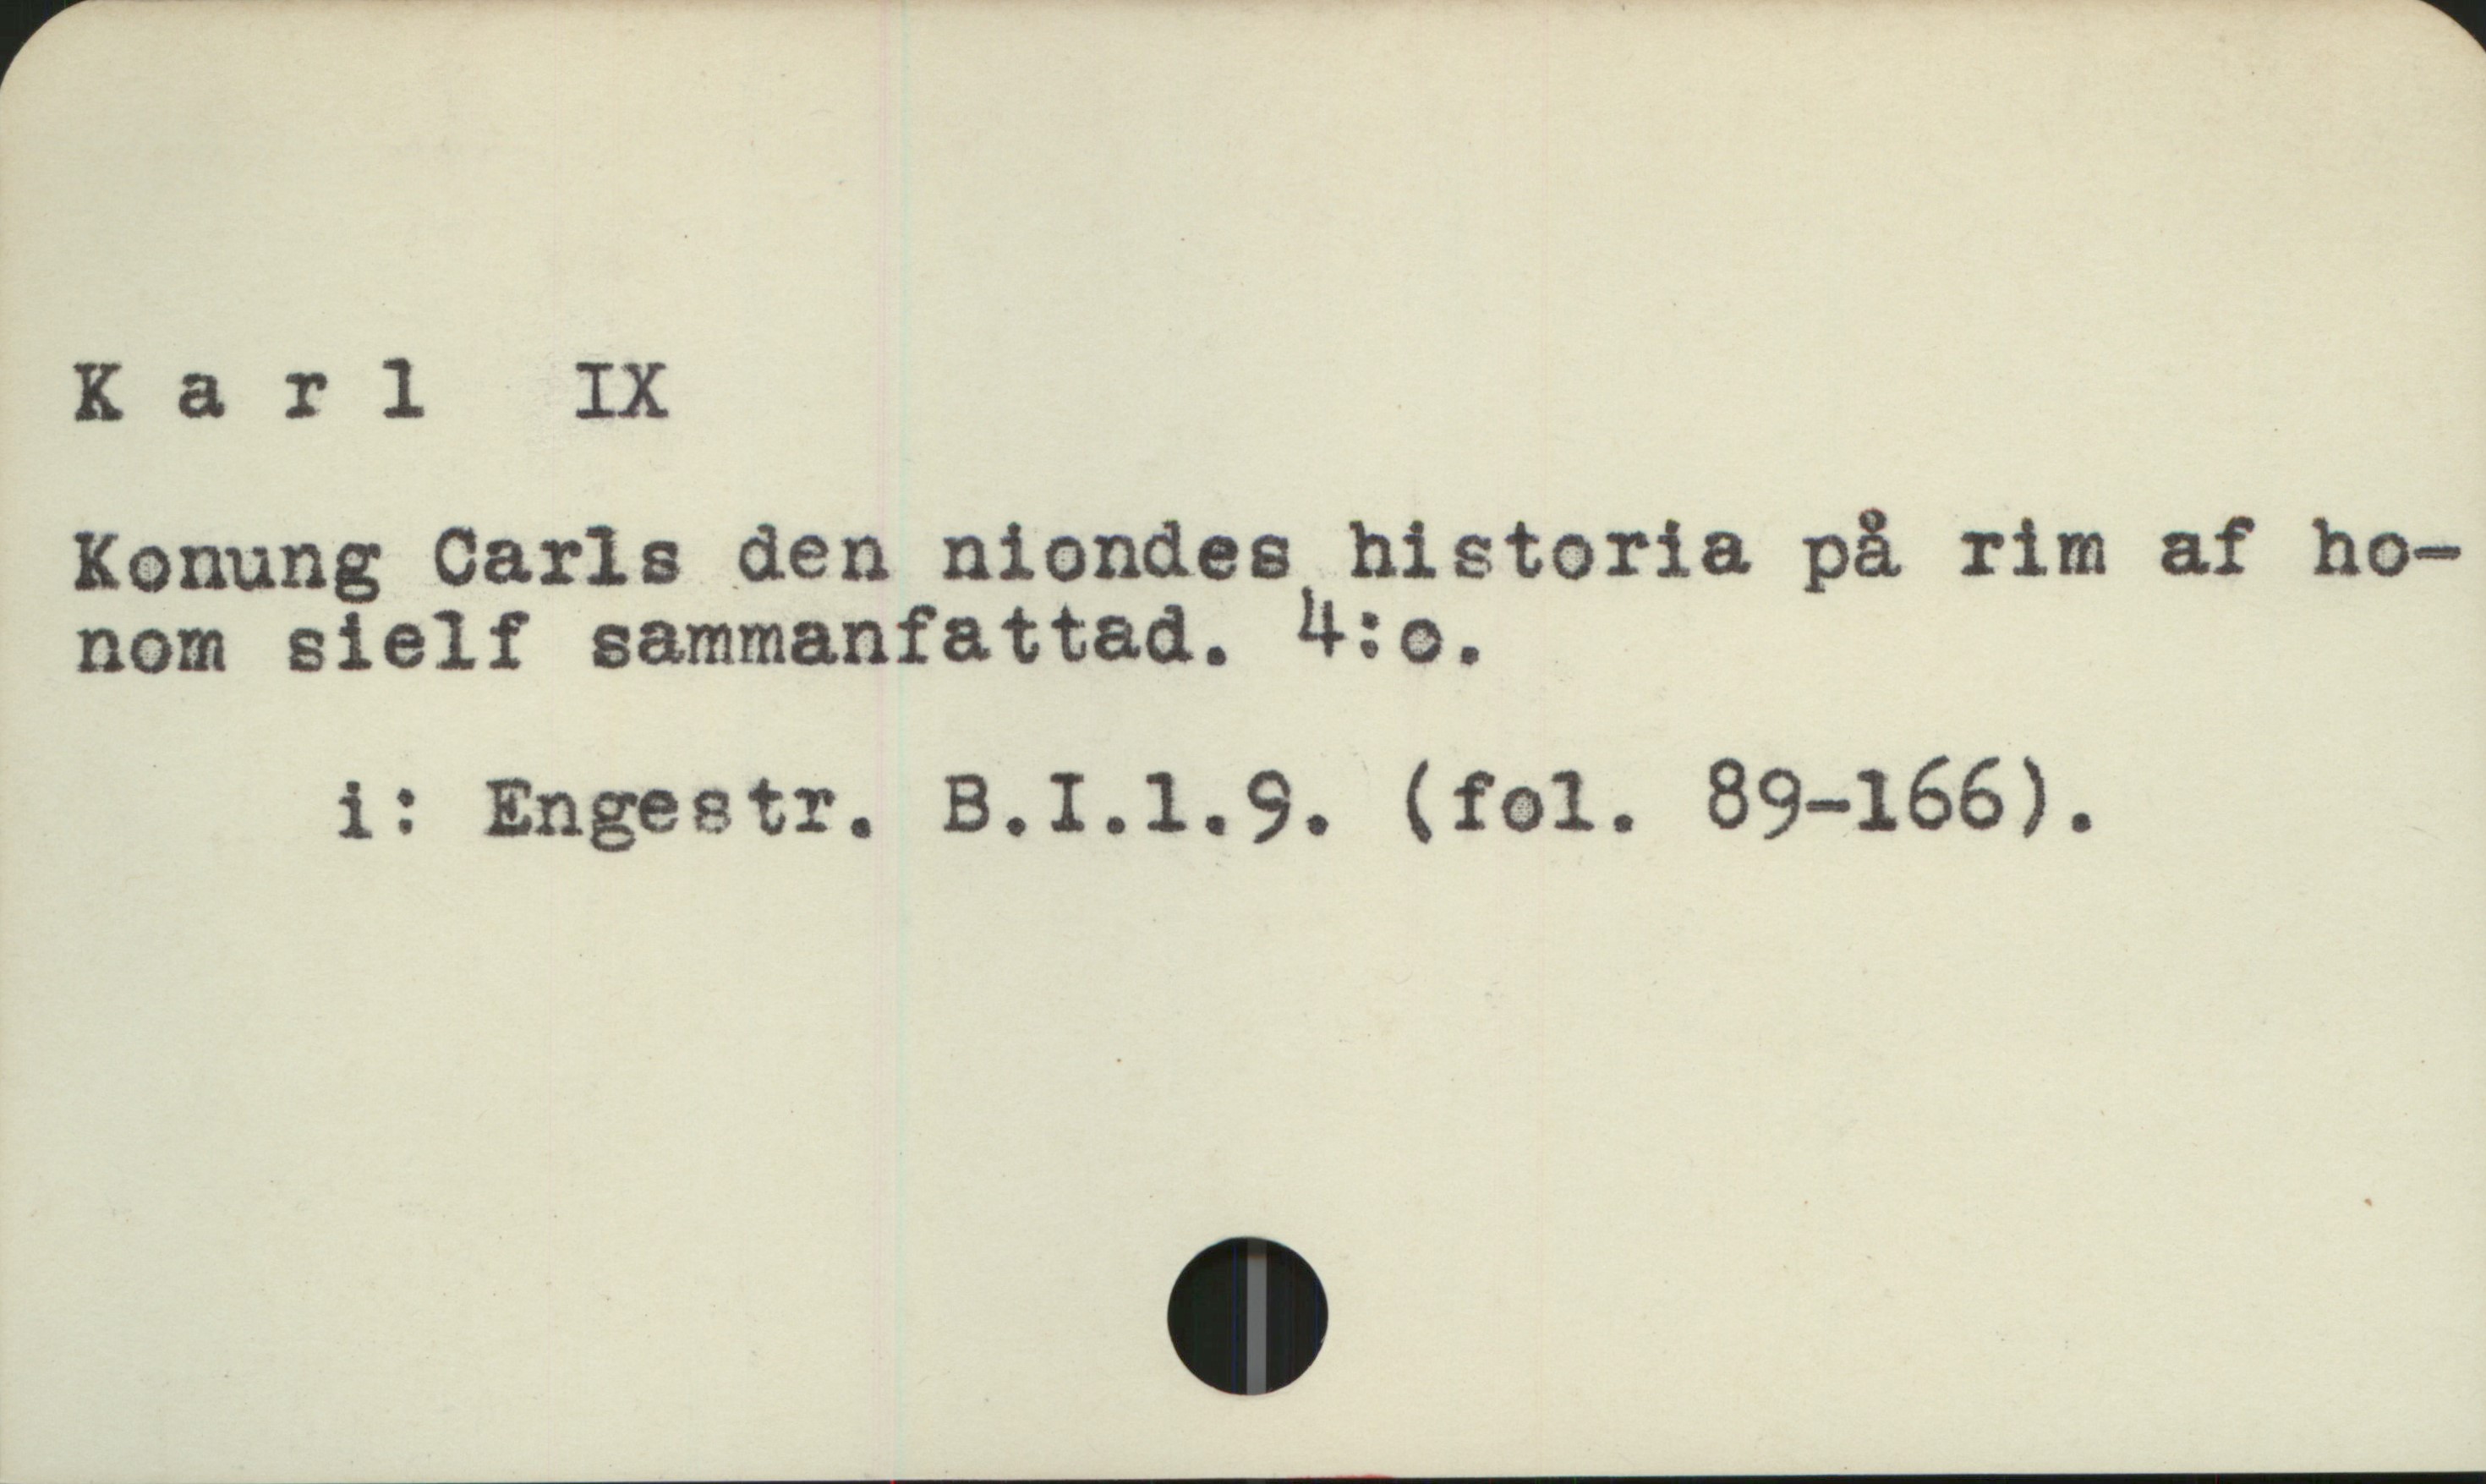  Karl IX
Konung Carls den niondes historia på rim af ho-
nom sielf sammanfattad. !:o.

i: Engestr. B.I.1.9. (fol. 89-166).

